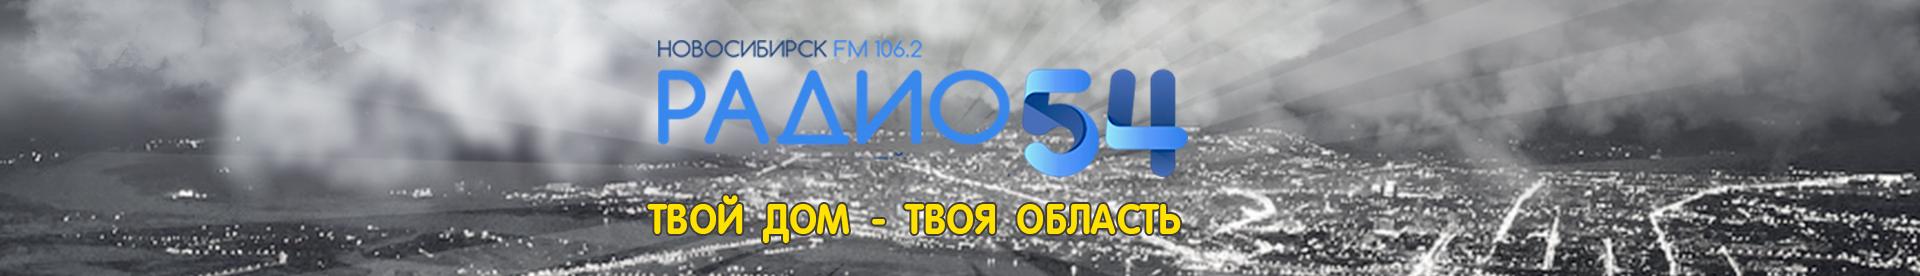 Радио 54 новосибирск 106.2 слушать. Радио 54 Новосибирск. Радио 54 Новосибирск логотипы. Радио 54 Новосибирск волна.